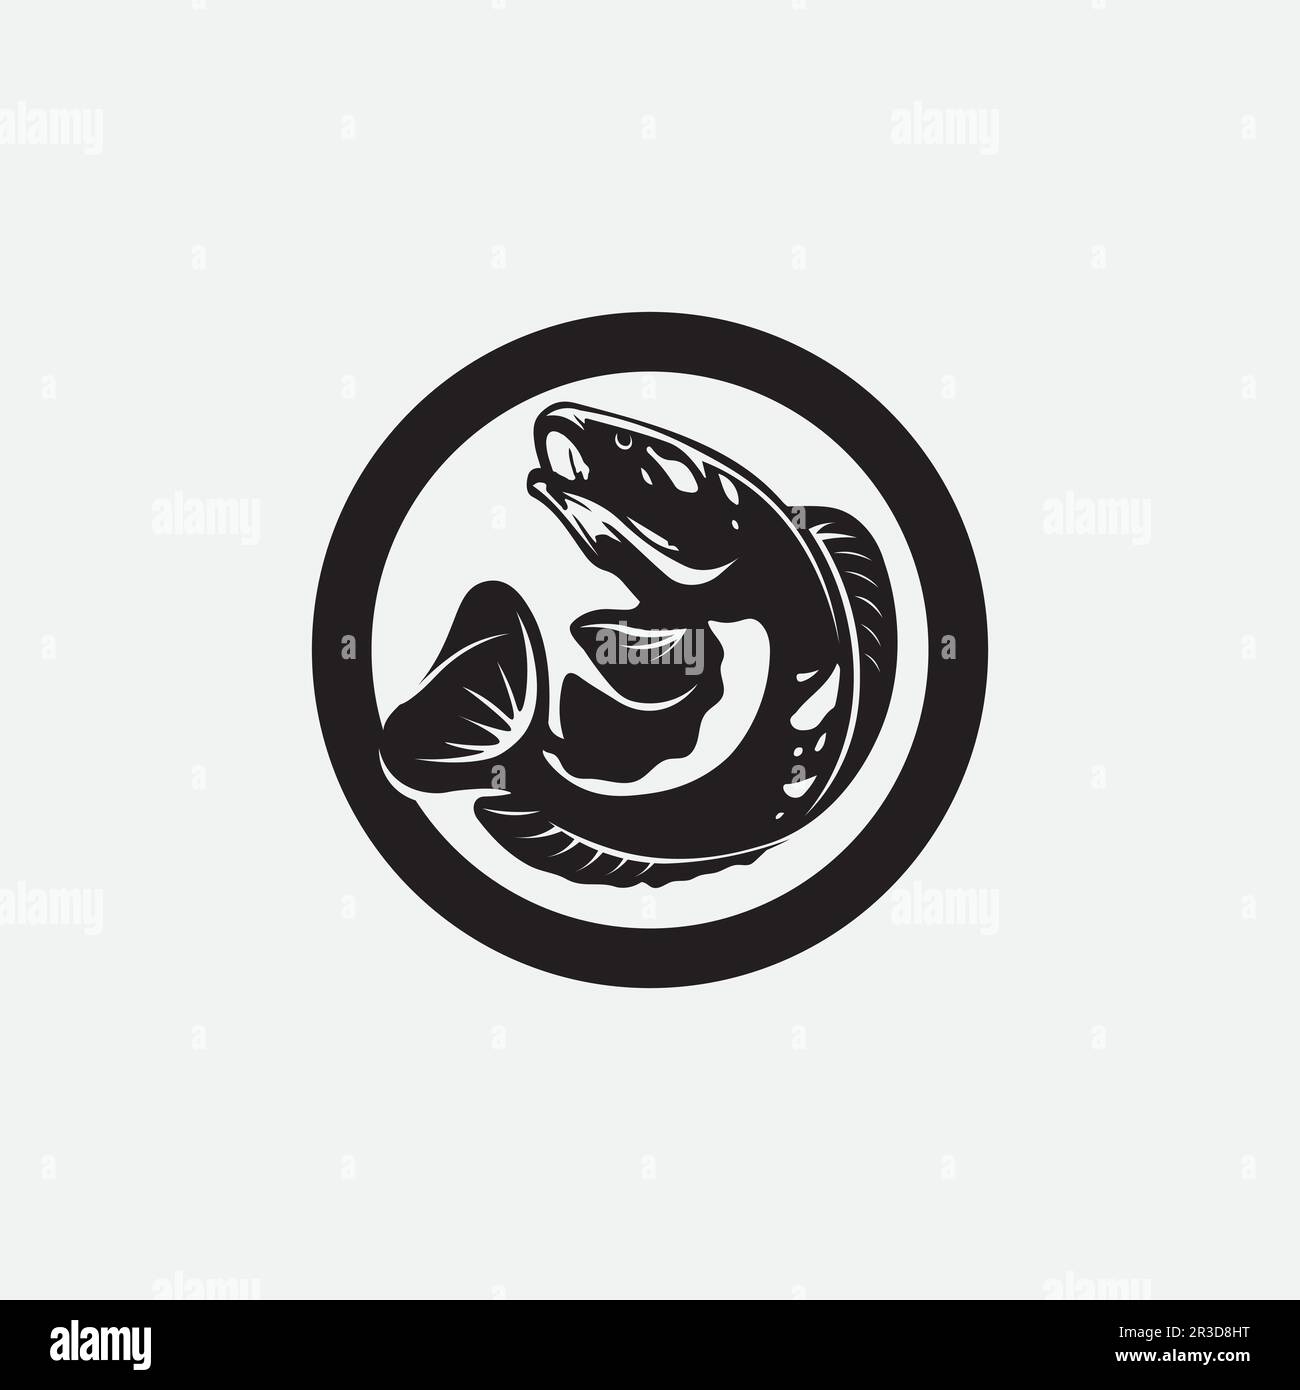 Channa Snakehead fish, Predator Fish, animal underwater design, logo, and illustration Stock Vector